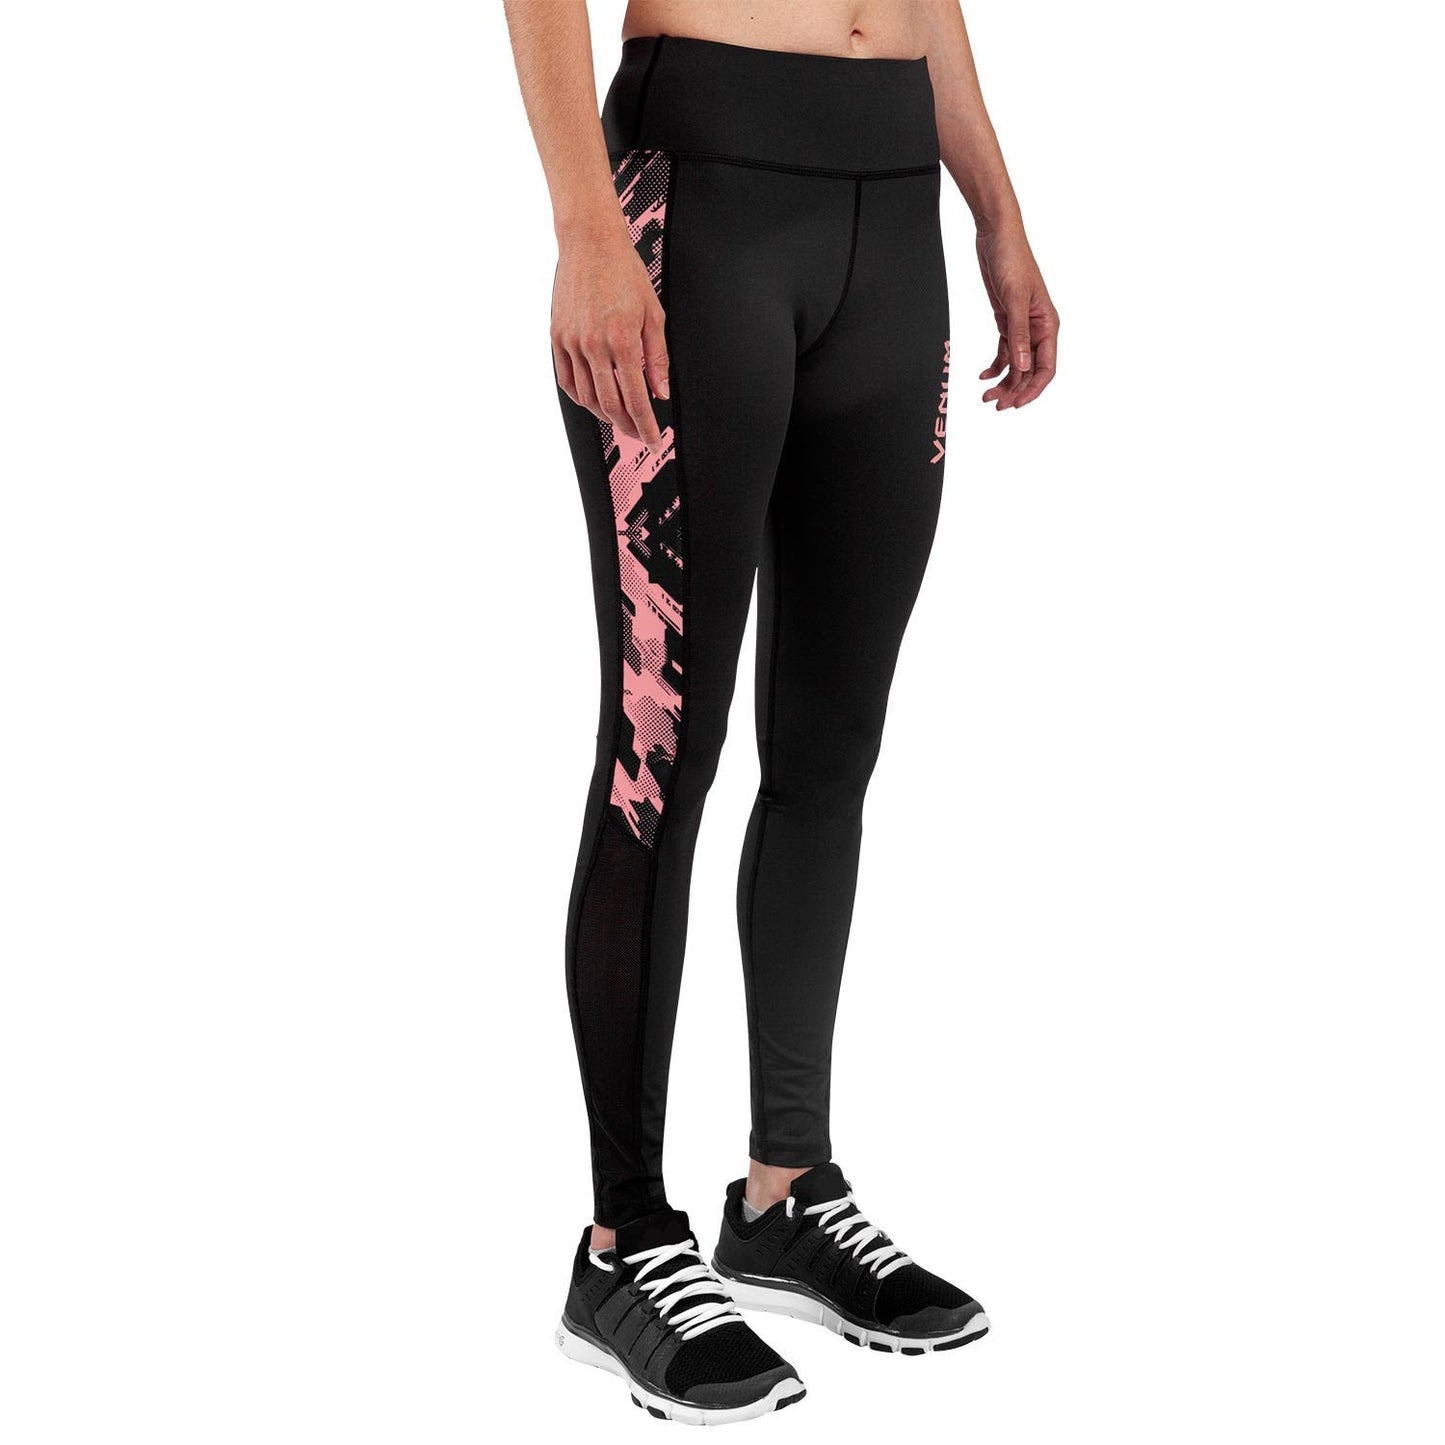 Venum Tecmo Leggings - For Women - Black/Pink